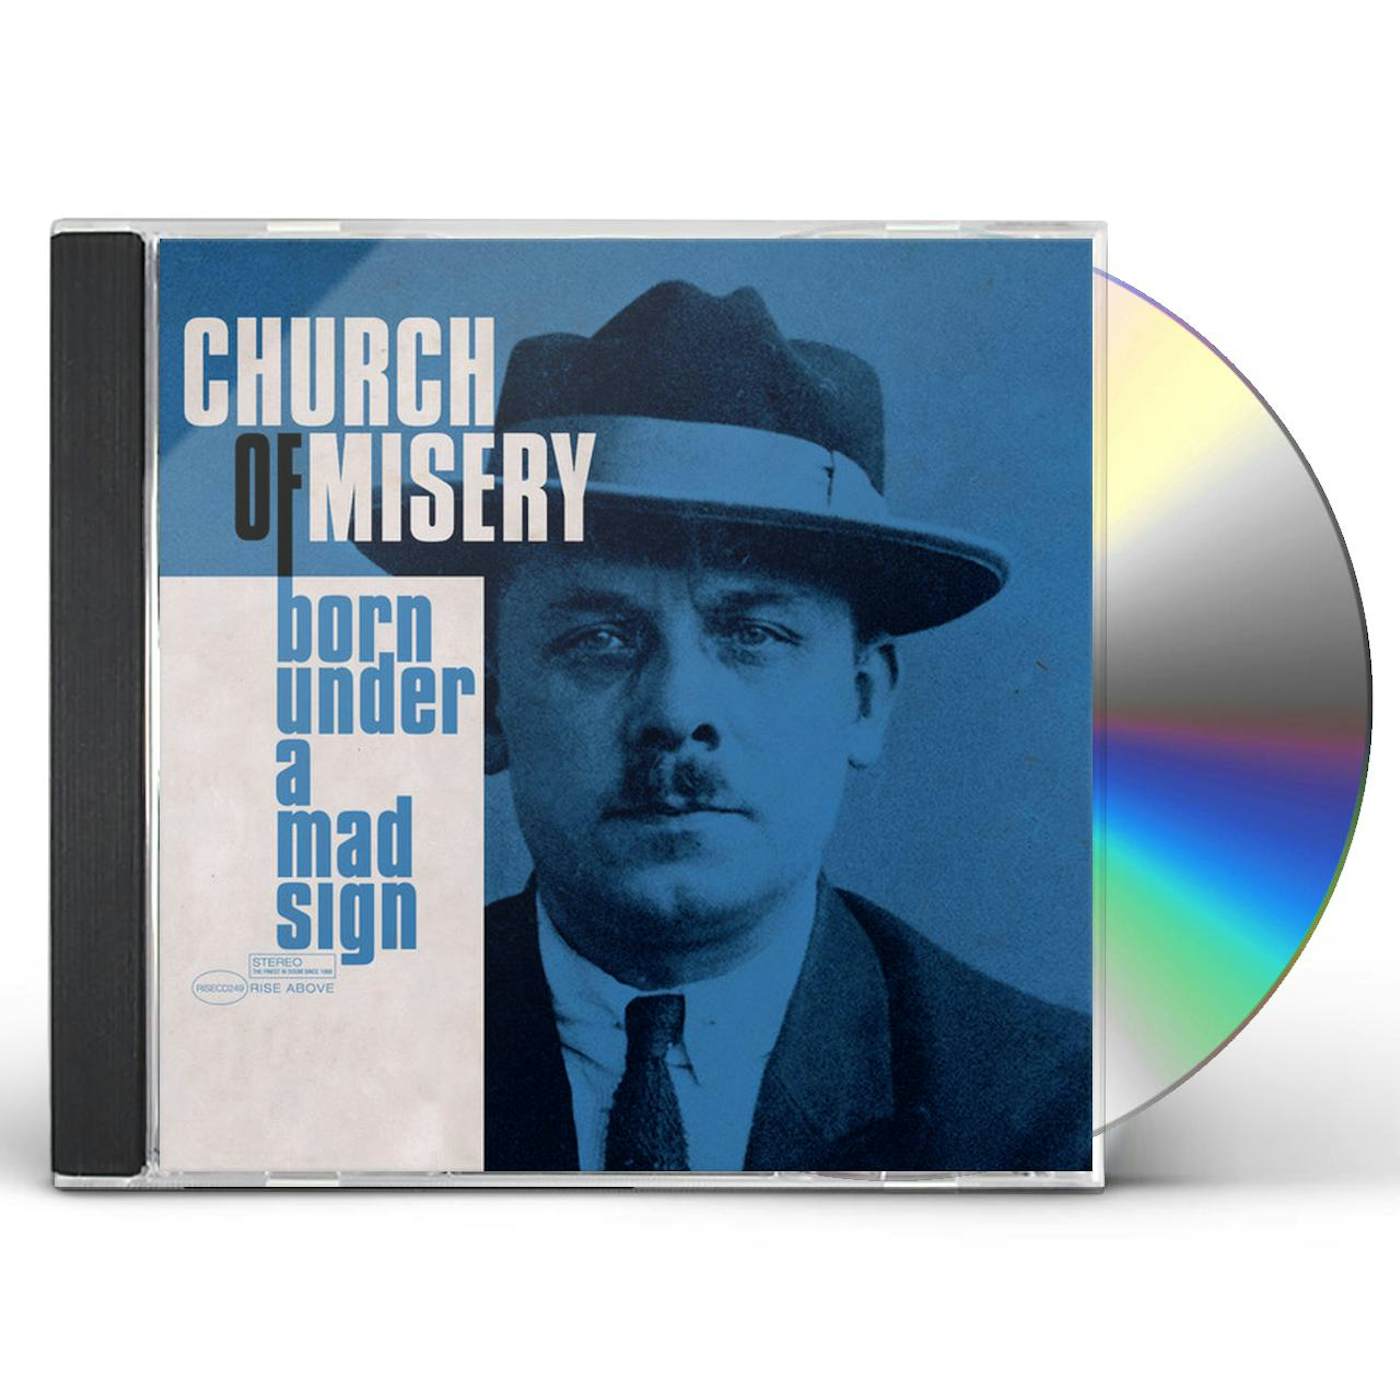 Church Of Misery BORN UNDER A MAD SIGN CD